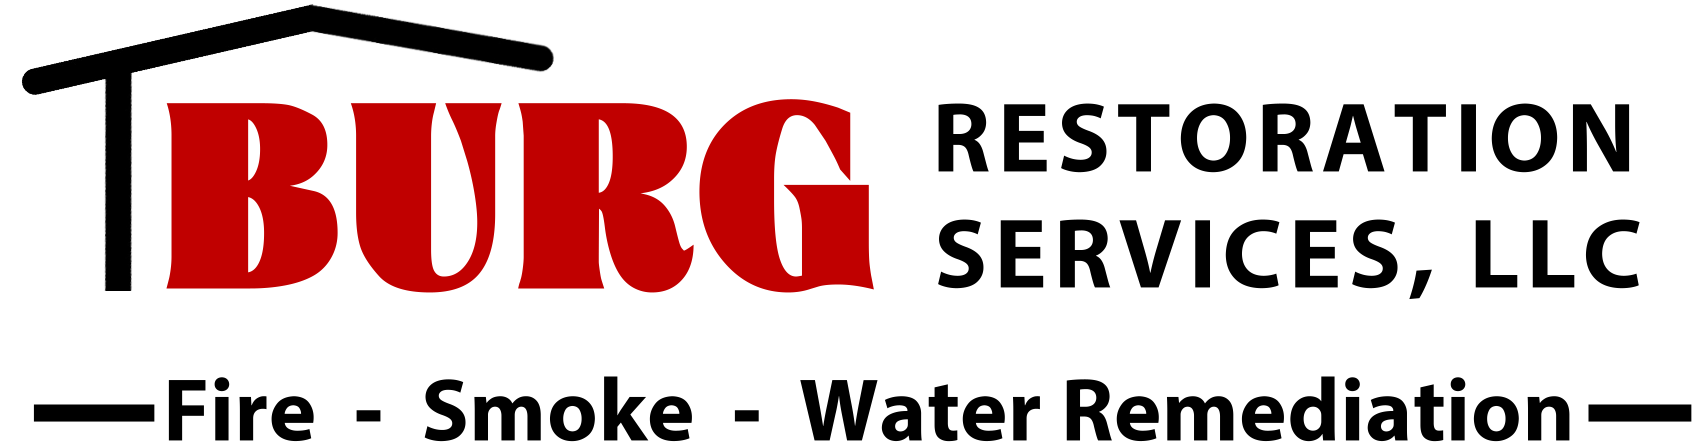 burg restoration services logo